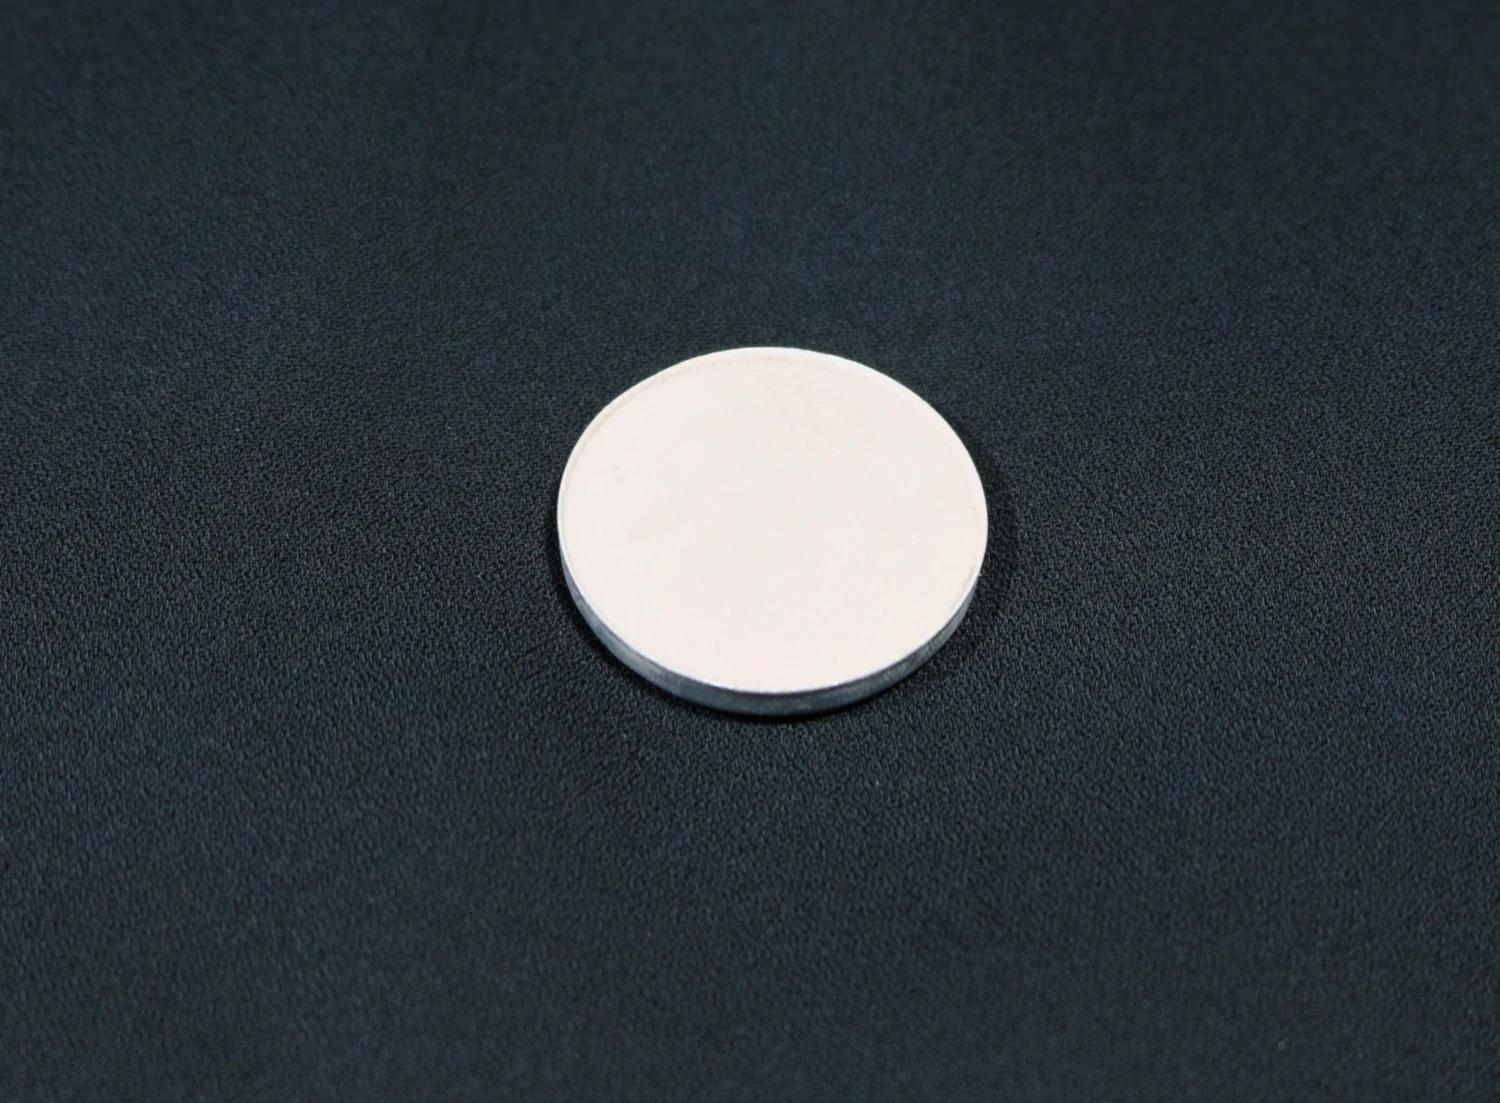 macro close-up of malt single eyeshadow by mac cosmetics on black background